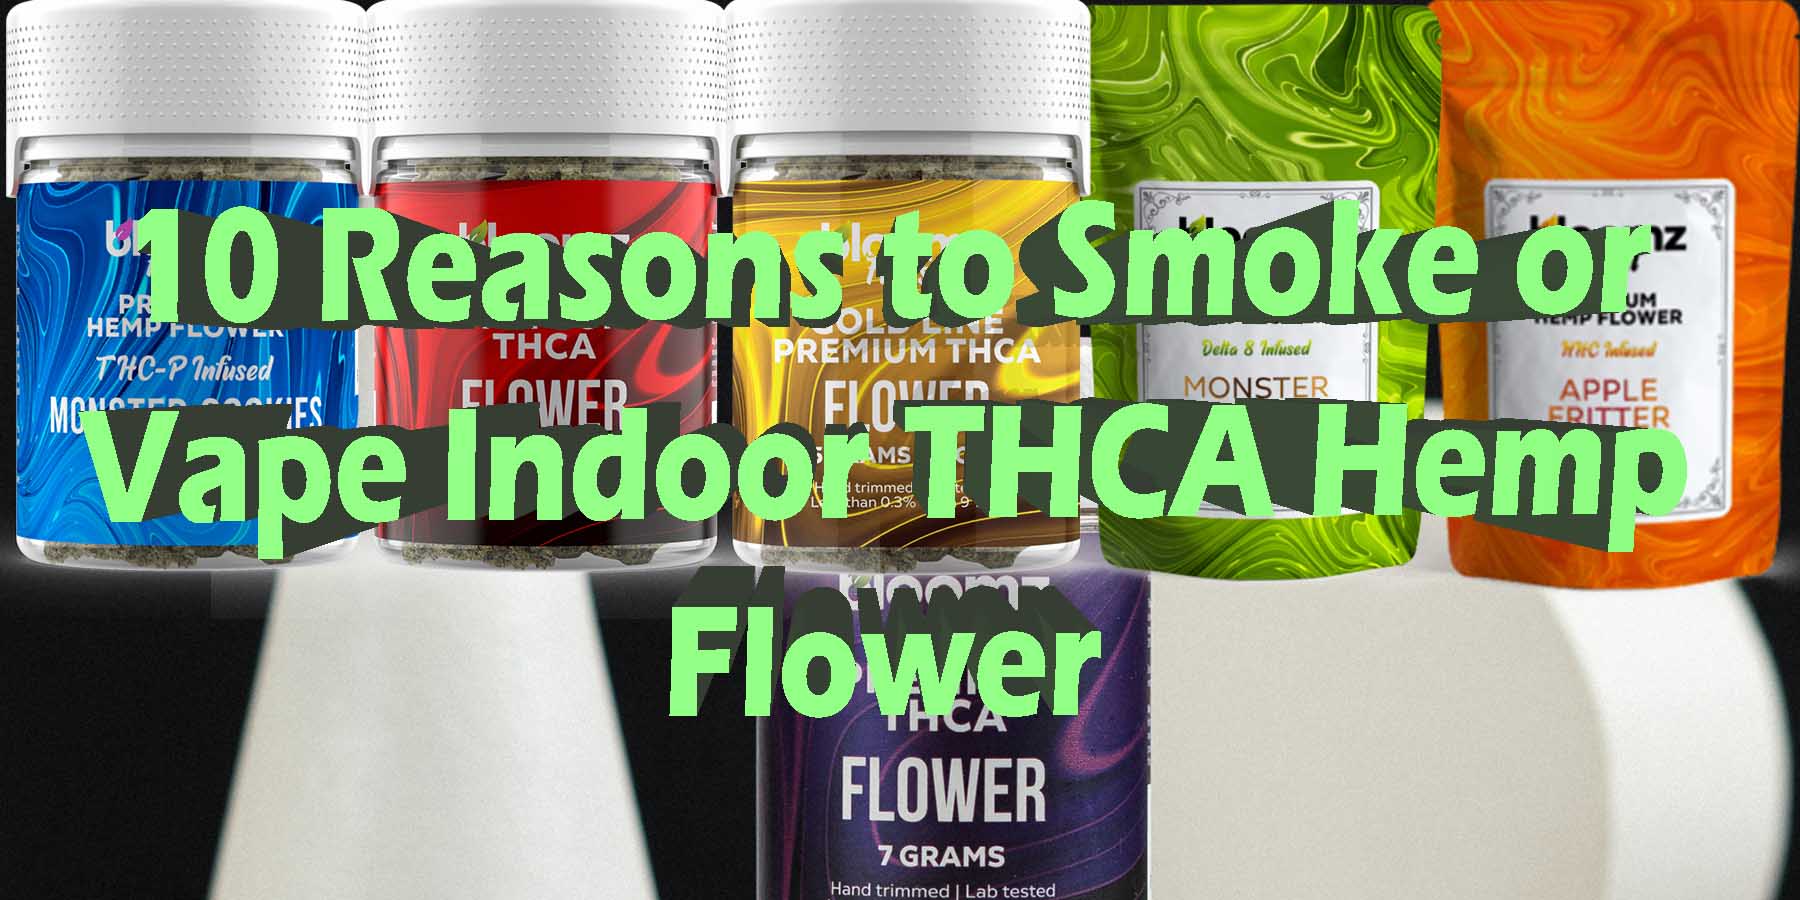 10 Reasons to Smoke or Vape Indoor THCA Hemp Flower GoodPrice GetNearMe LowestCoupon DiscountStore Shoponline VapeCarts Online StrongestSmoke ShopBinoid THC ShopBloomz